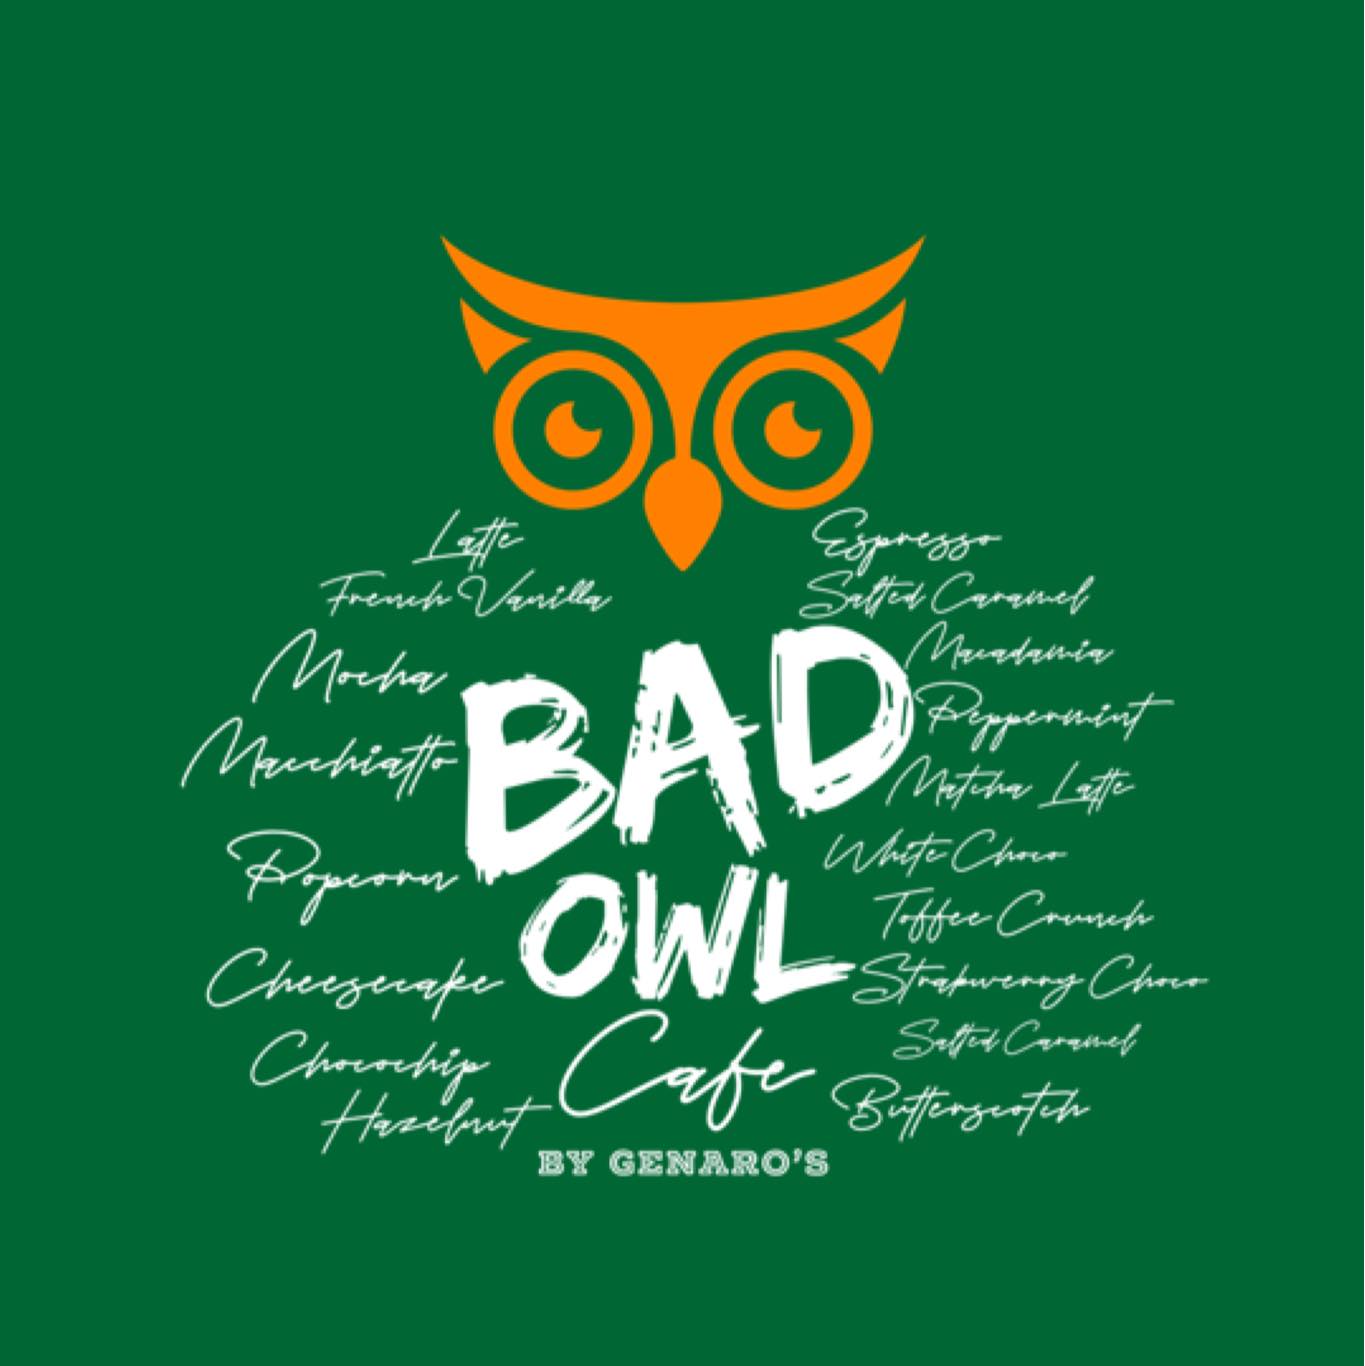 Bad Owl Cafe